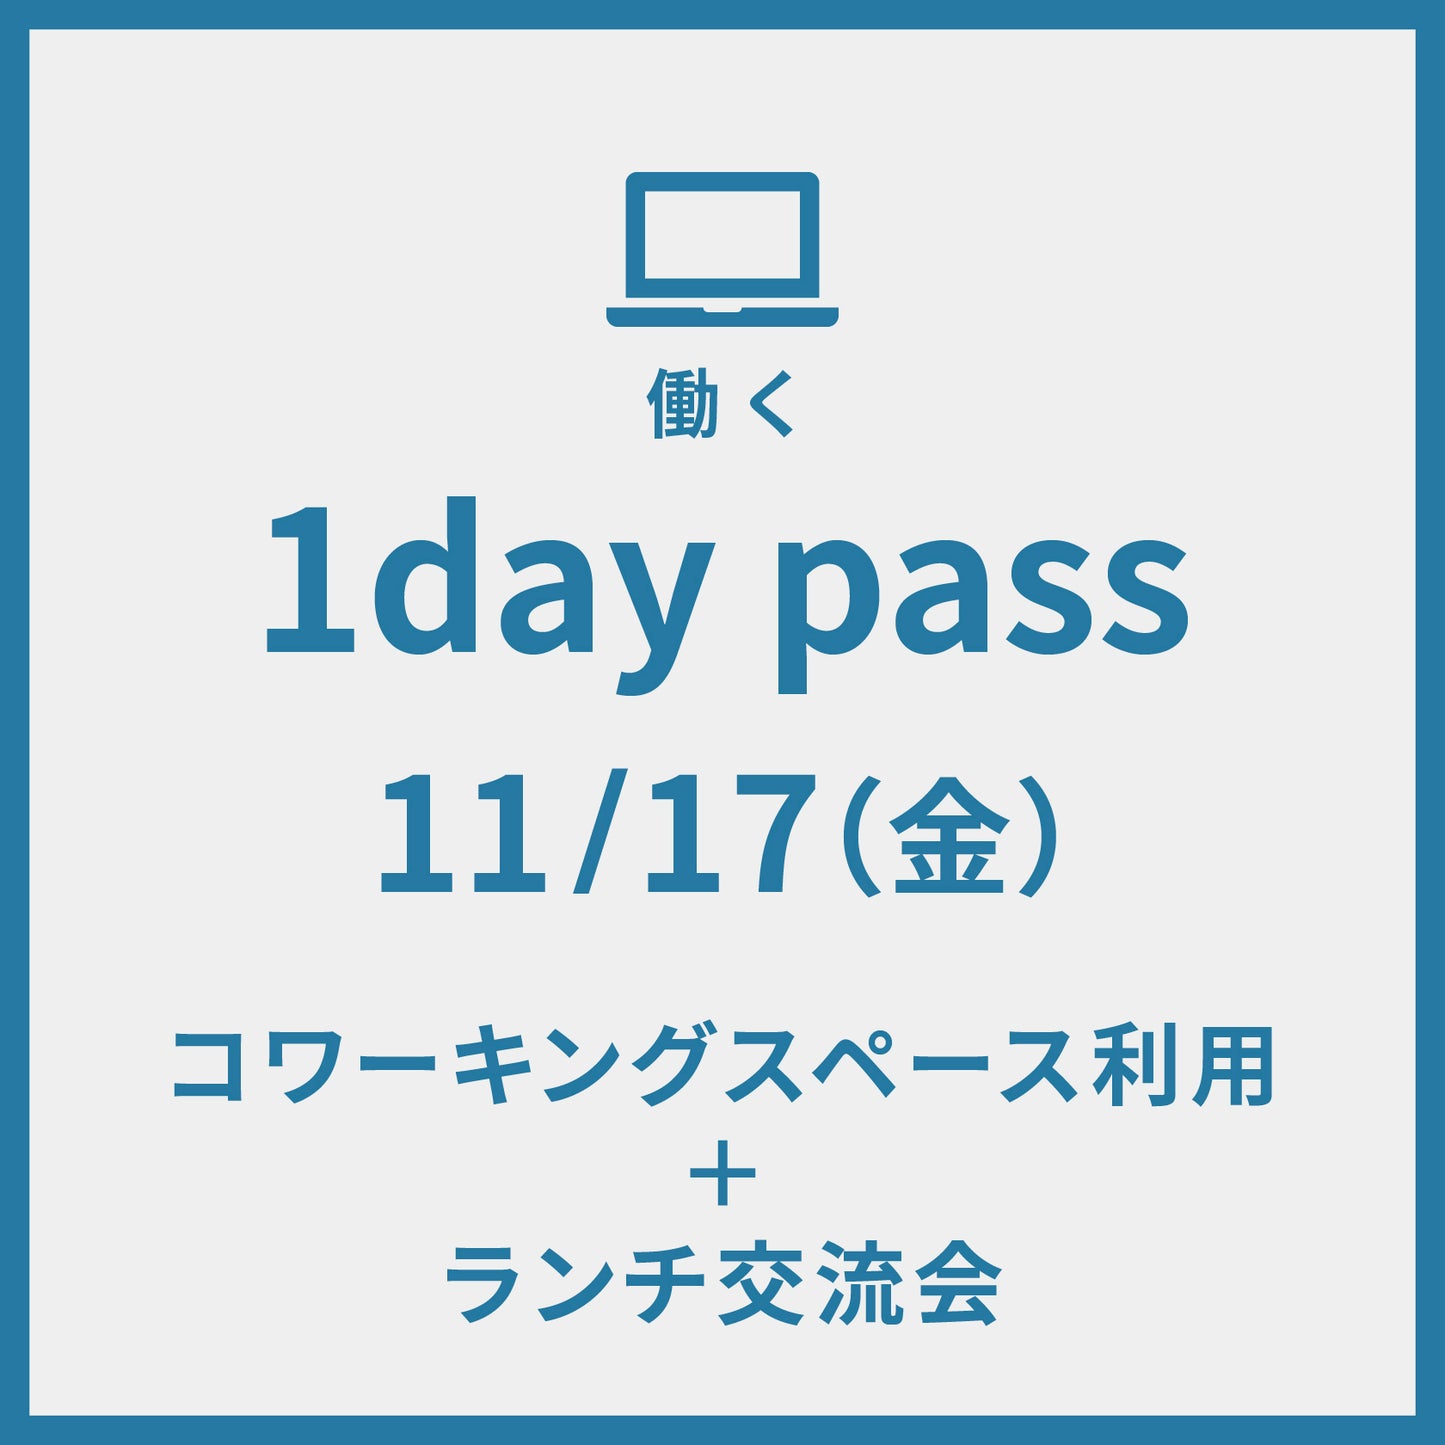 1day pass 11/17 コワーキングスペース利用＋ランチ交流会